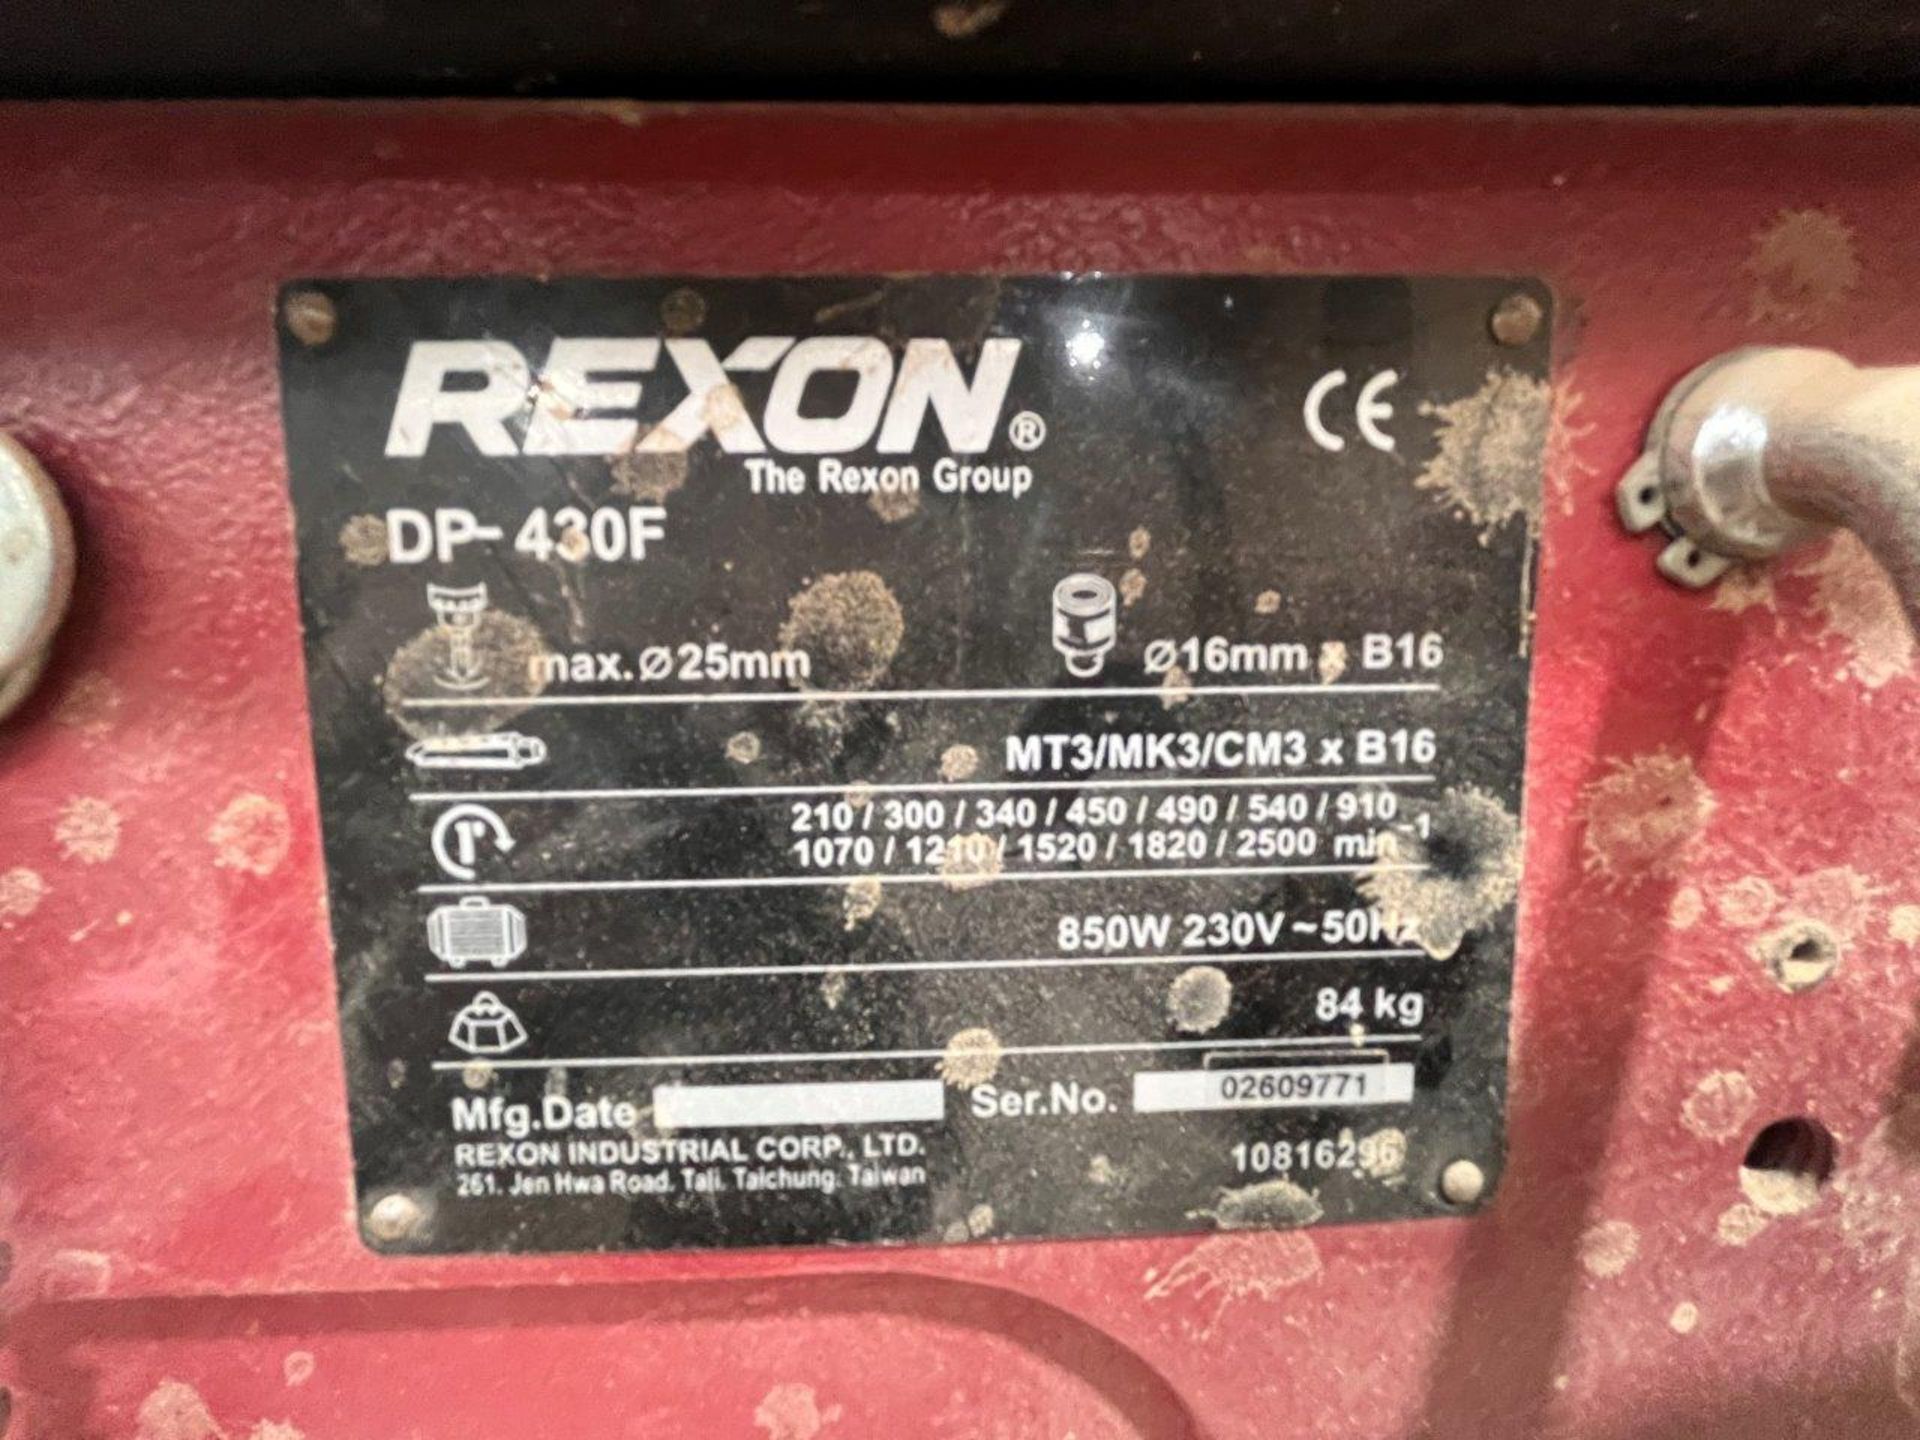 Rexon DP-430F floor standing pillar drill press, serial no. 02609771 - Image 2 of 3